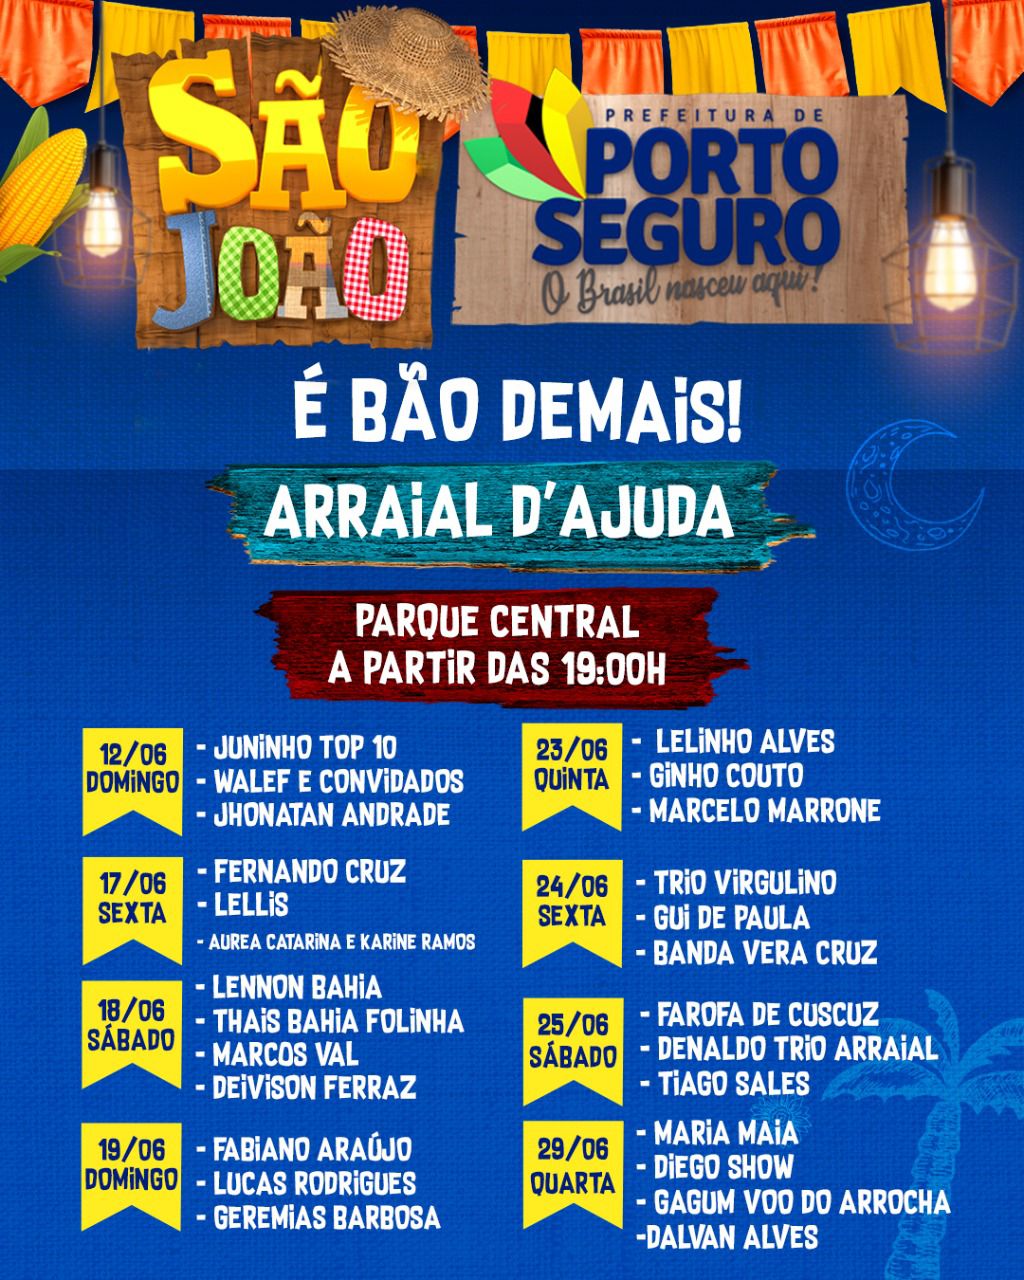 Prefeitura Municipal de Porto Seguro - Portal Oficial.